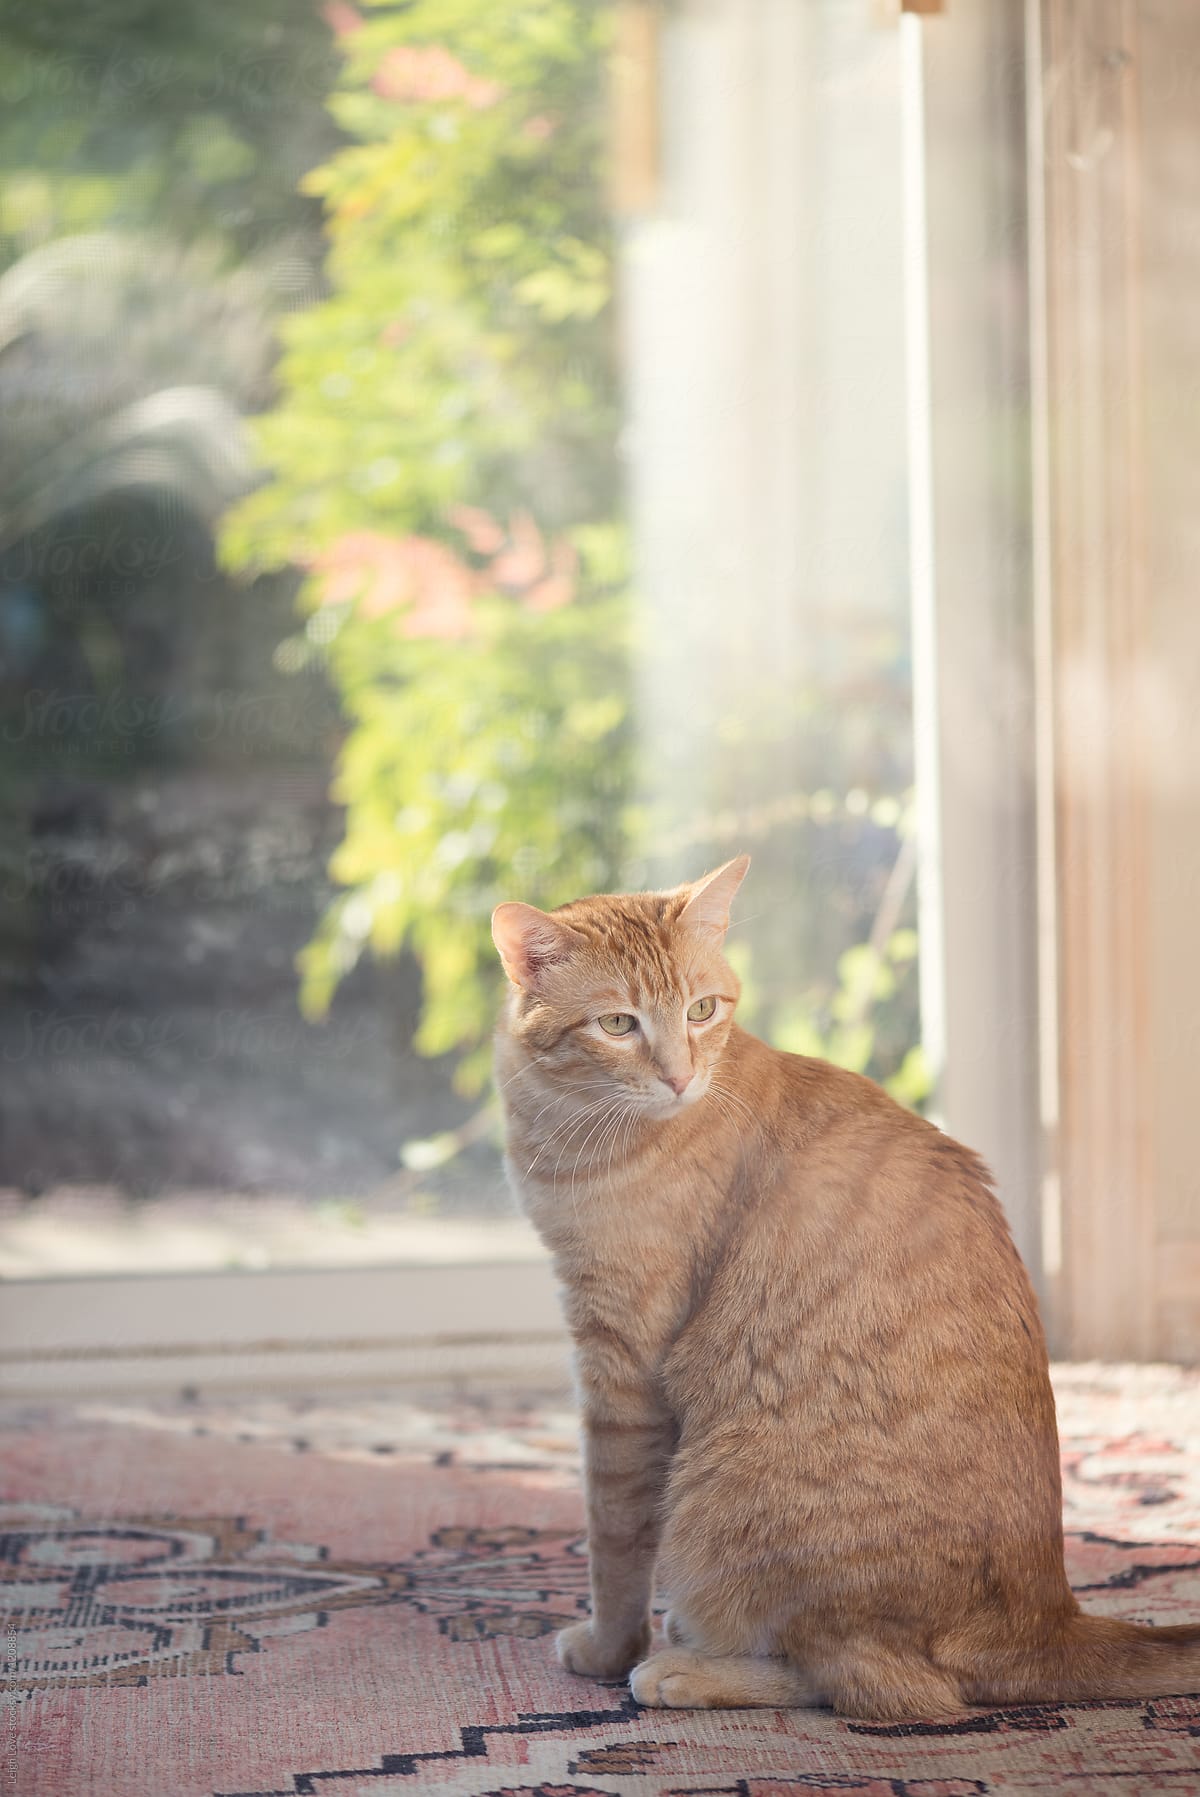 Three Legged Orange Tabby Cat Sitting On Oriental Rug Looks Out The Window